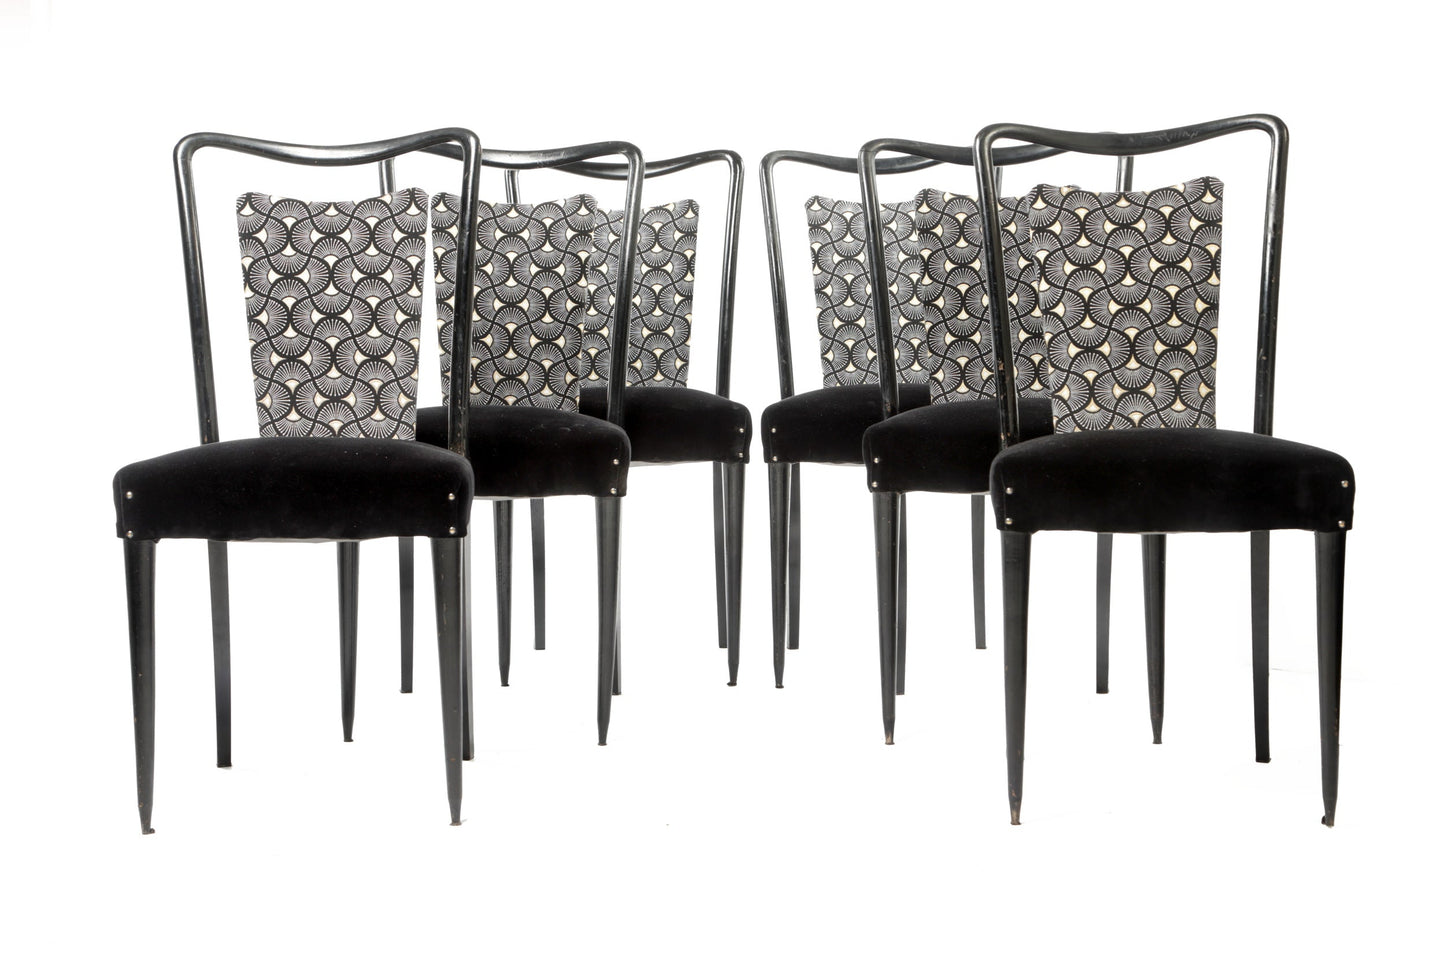 Six 1950s Guglielmo Ulrich chairs